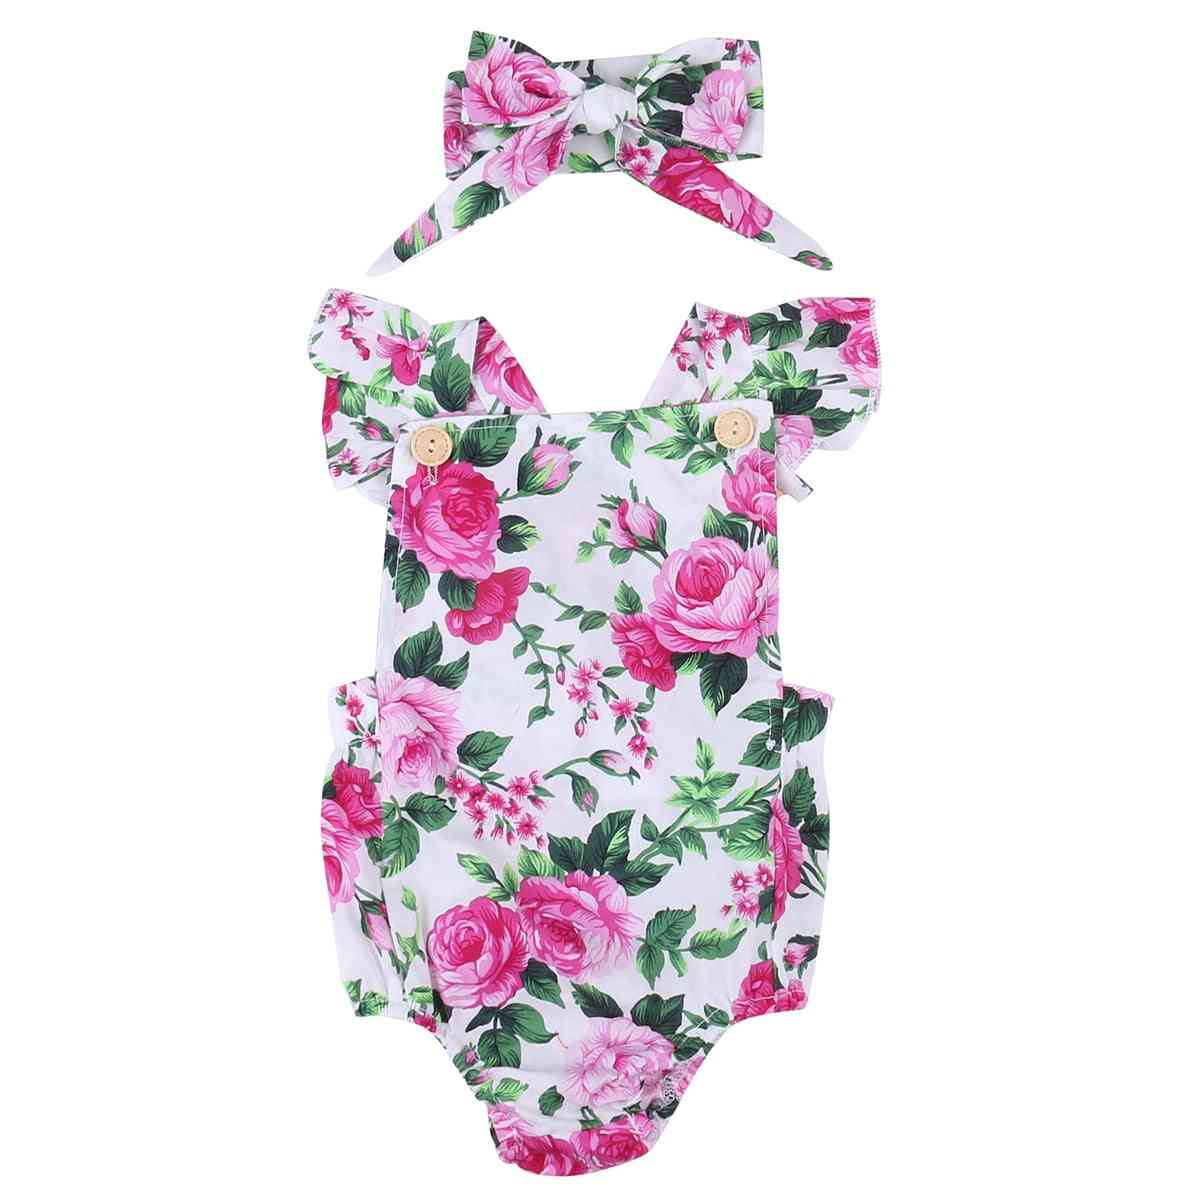 Cute Floral Jumpsuit Romper + Headband, Outfits Set